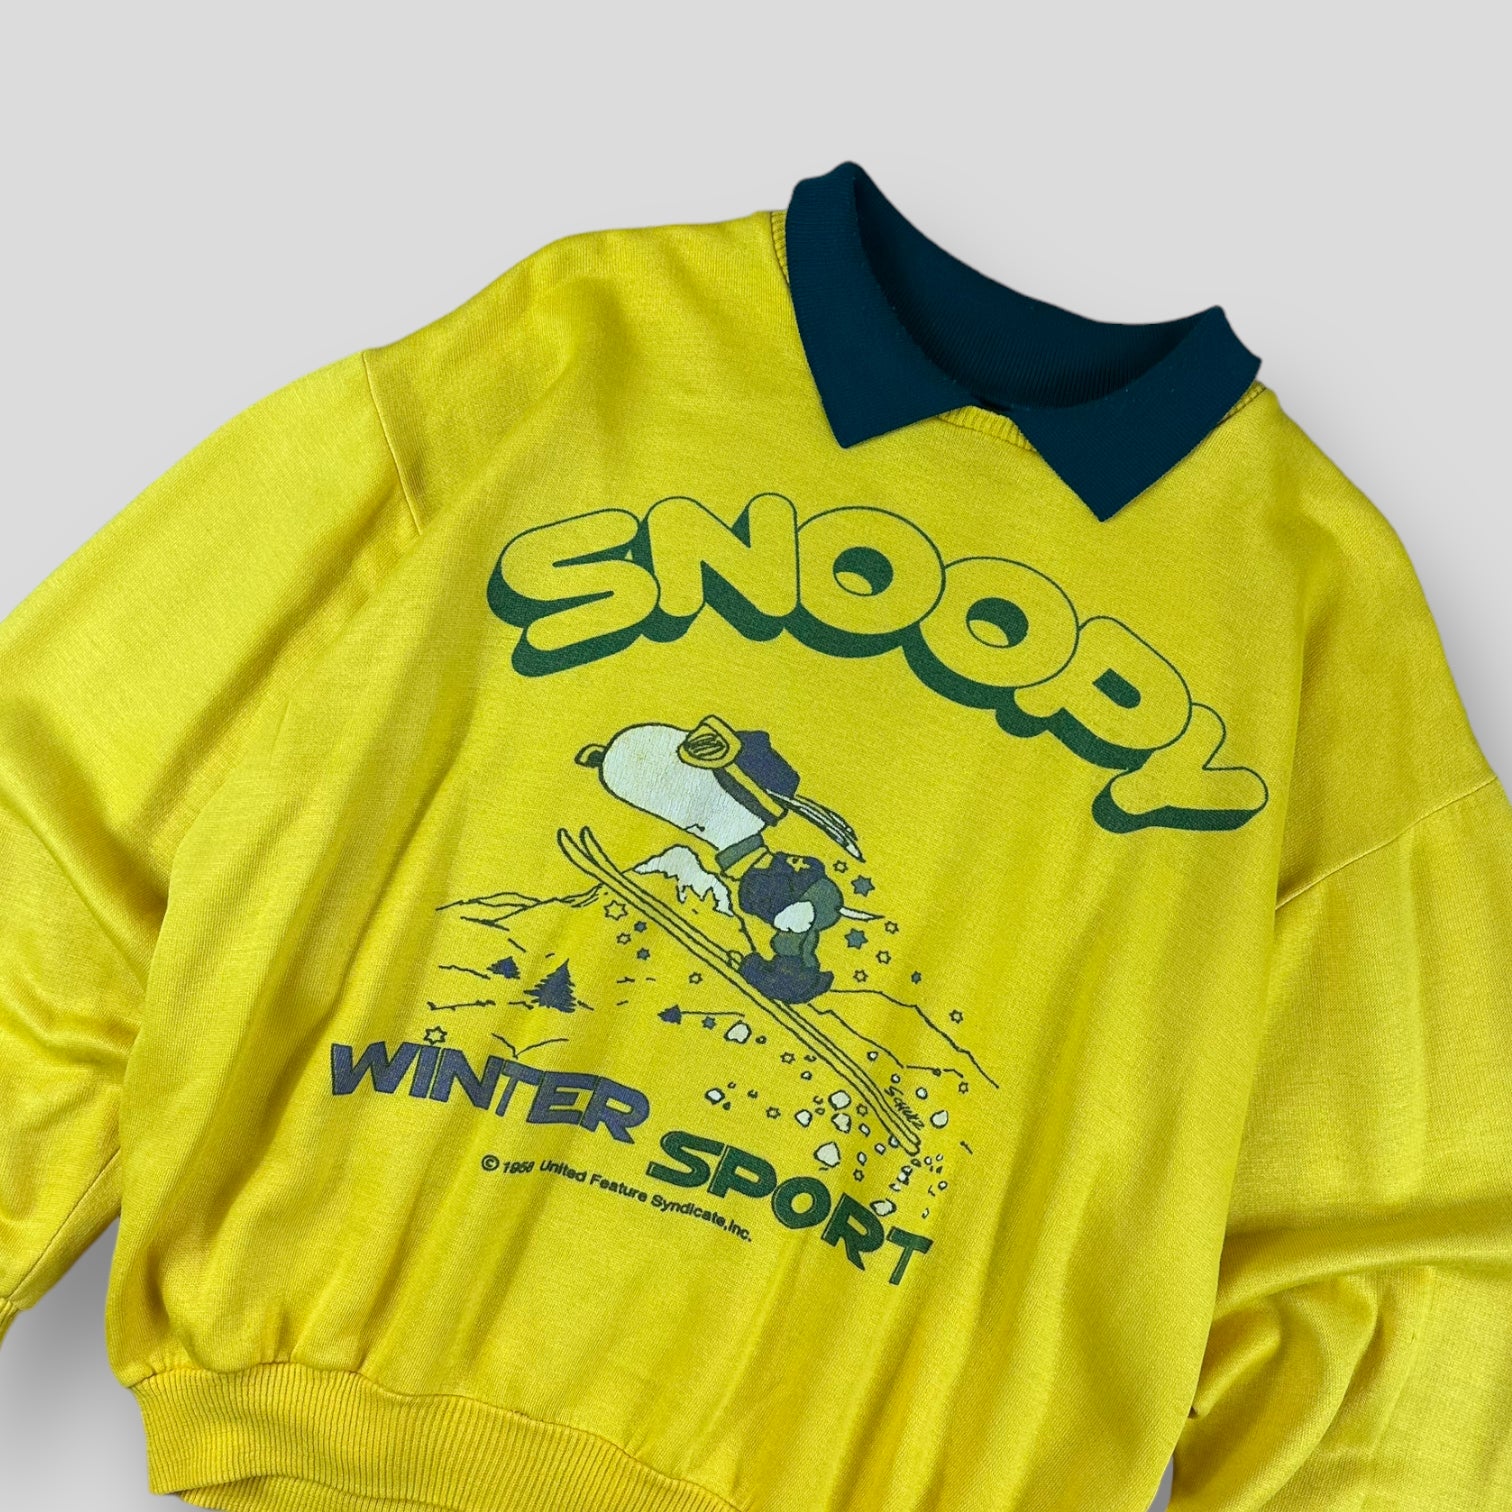 Snoopy sweatshirt